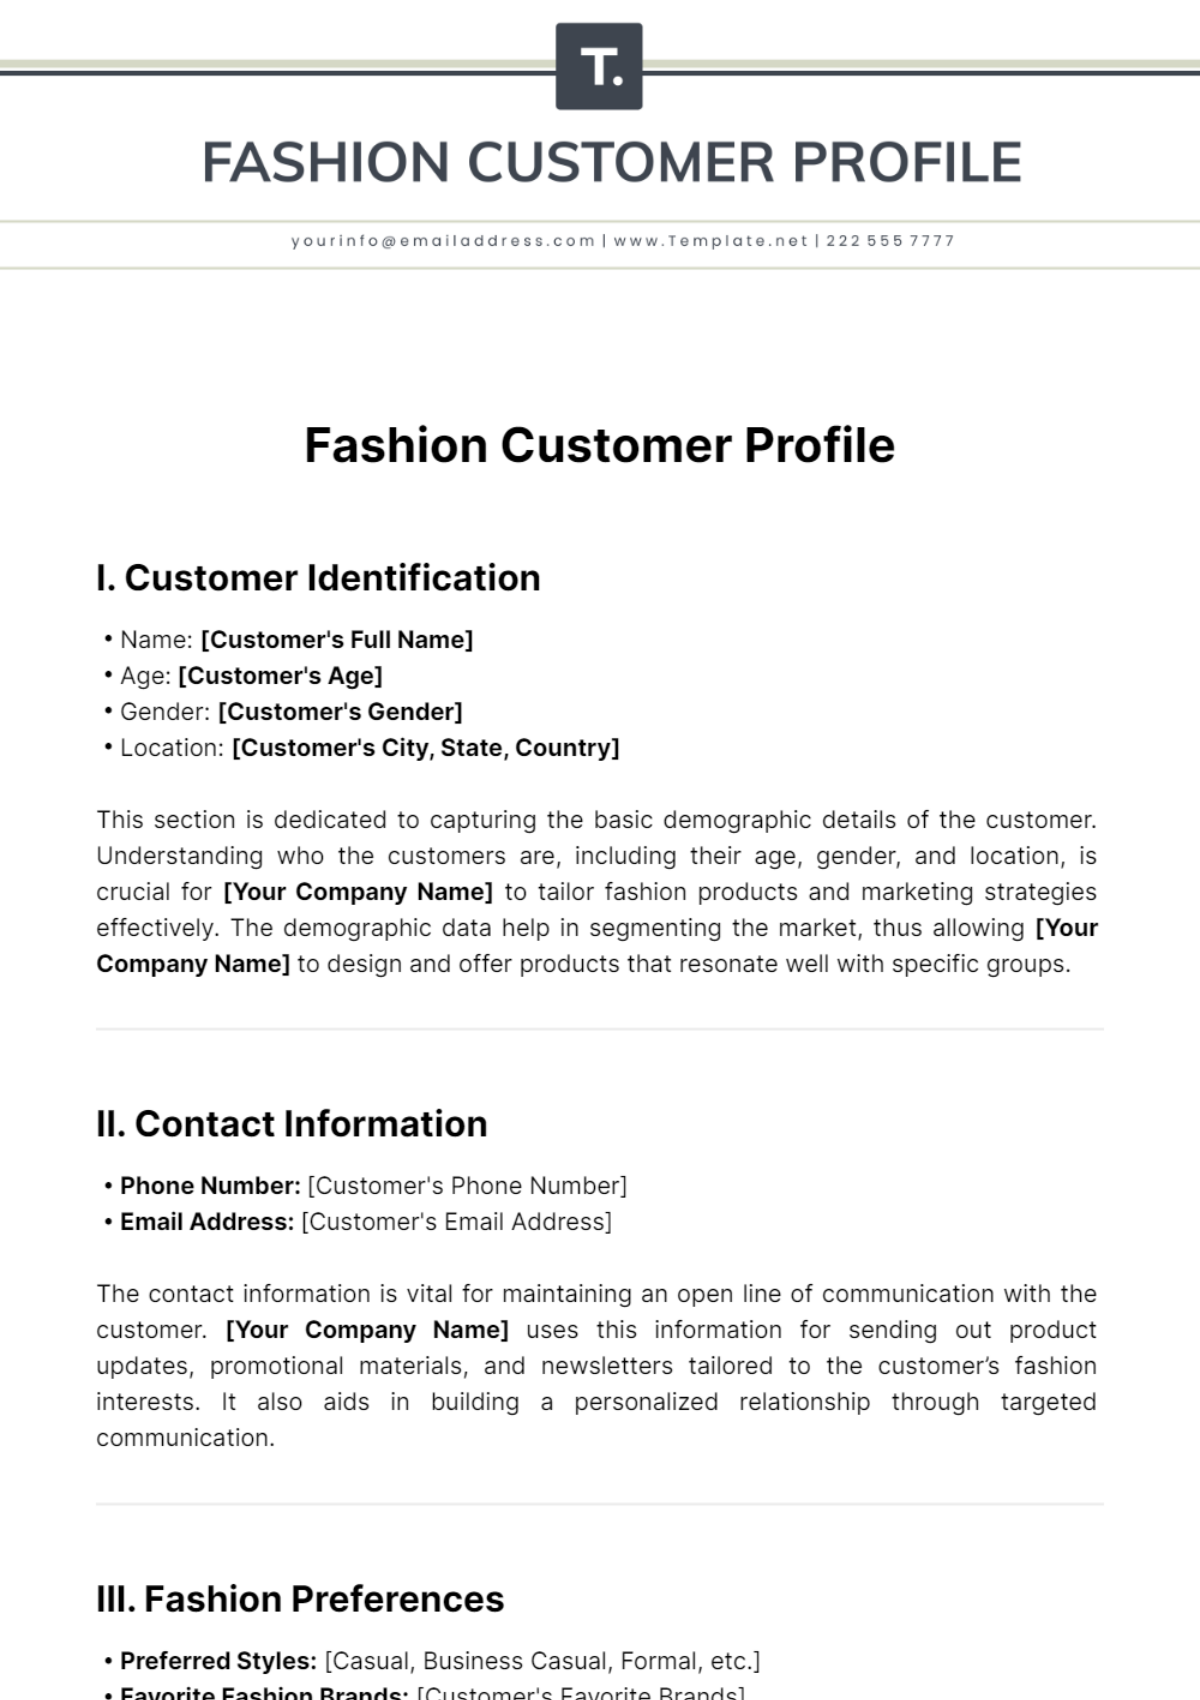 Fashion Customer Profile Template